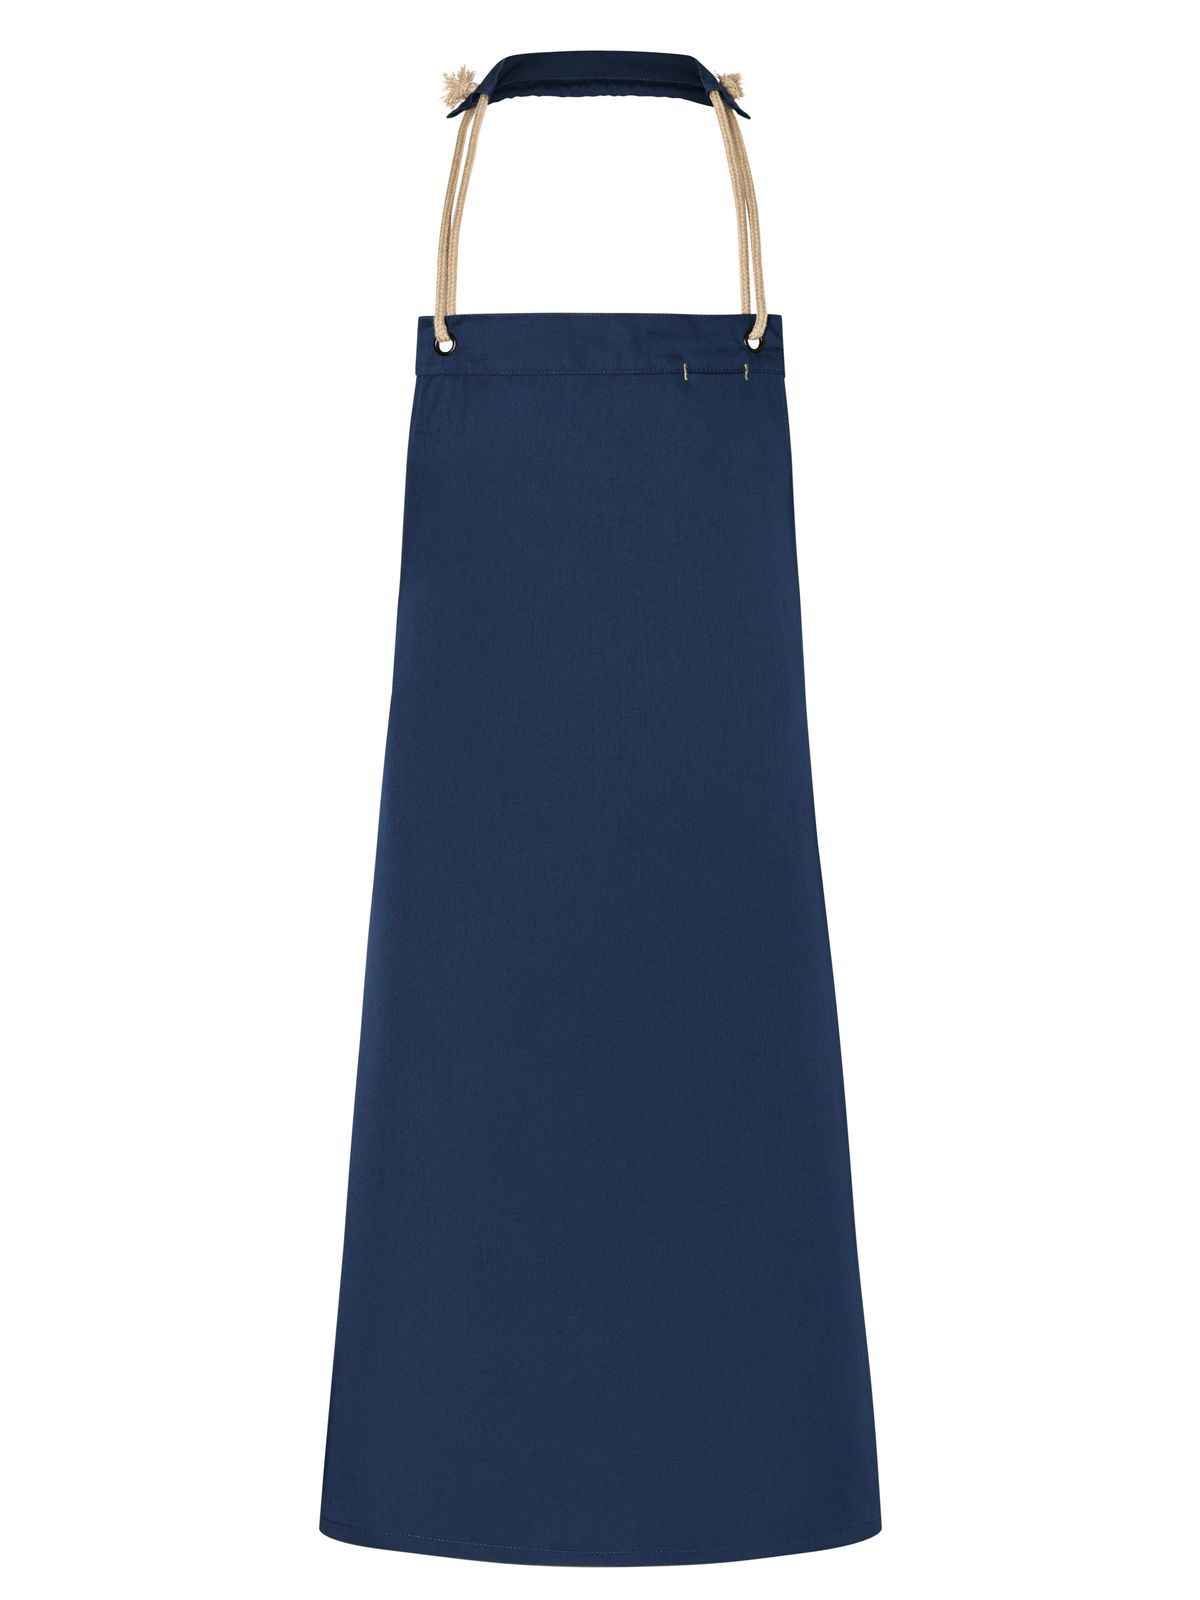 bib-apron-with-cords-70-x-85-cm-steel-blue.webp